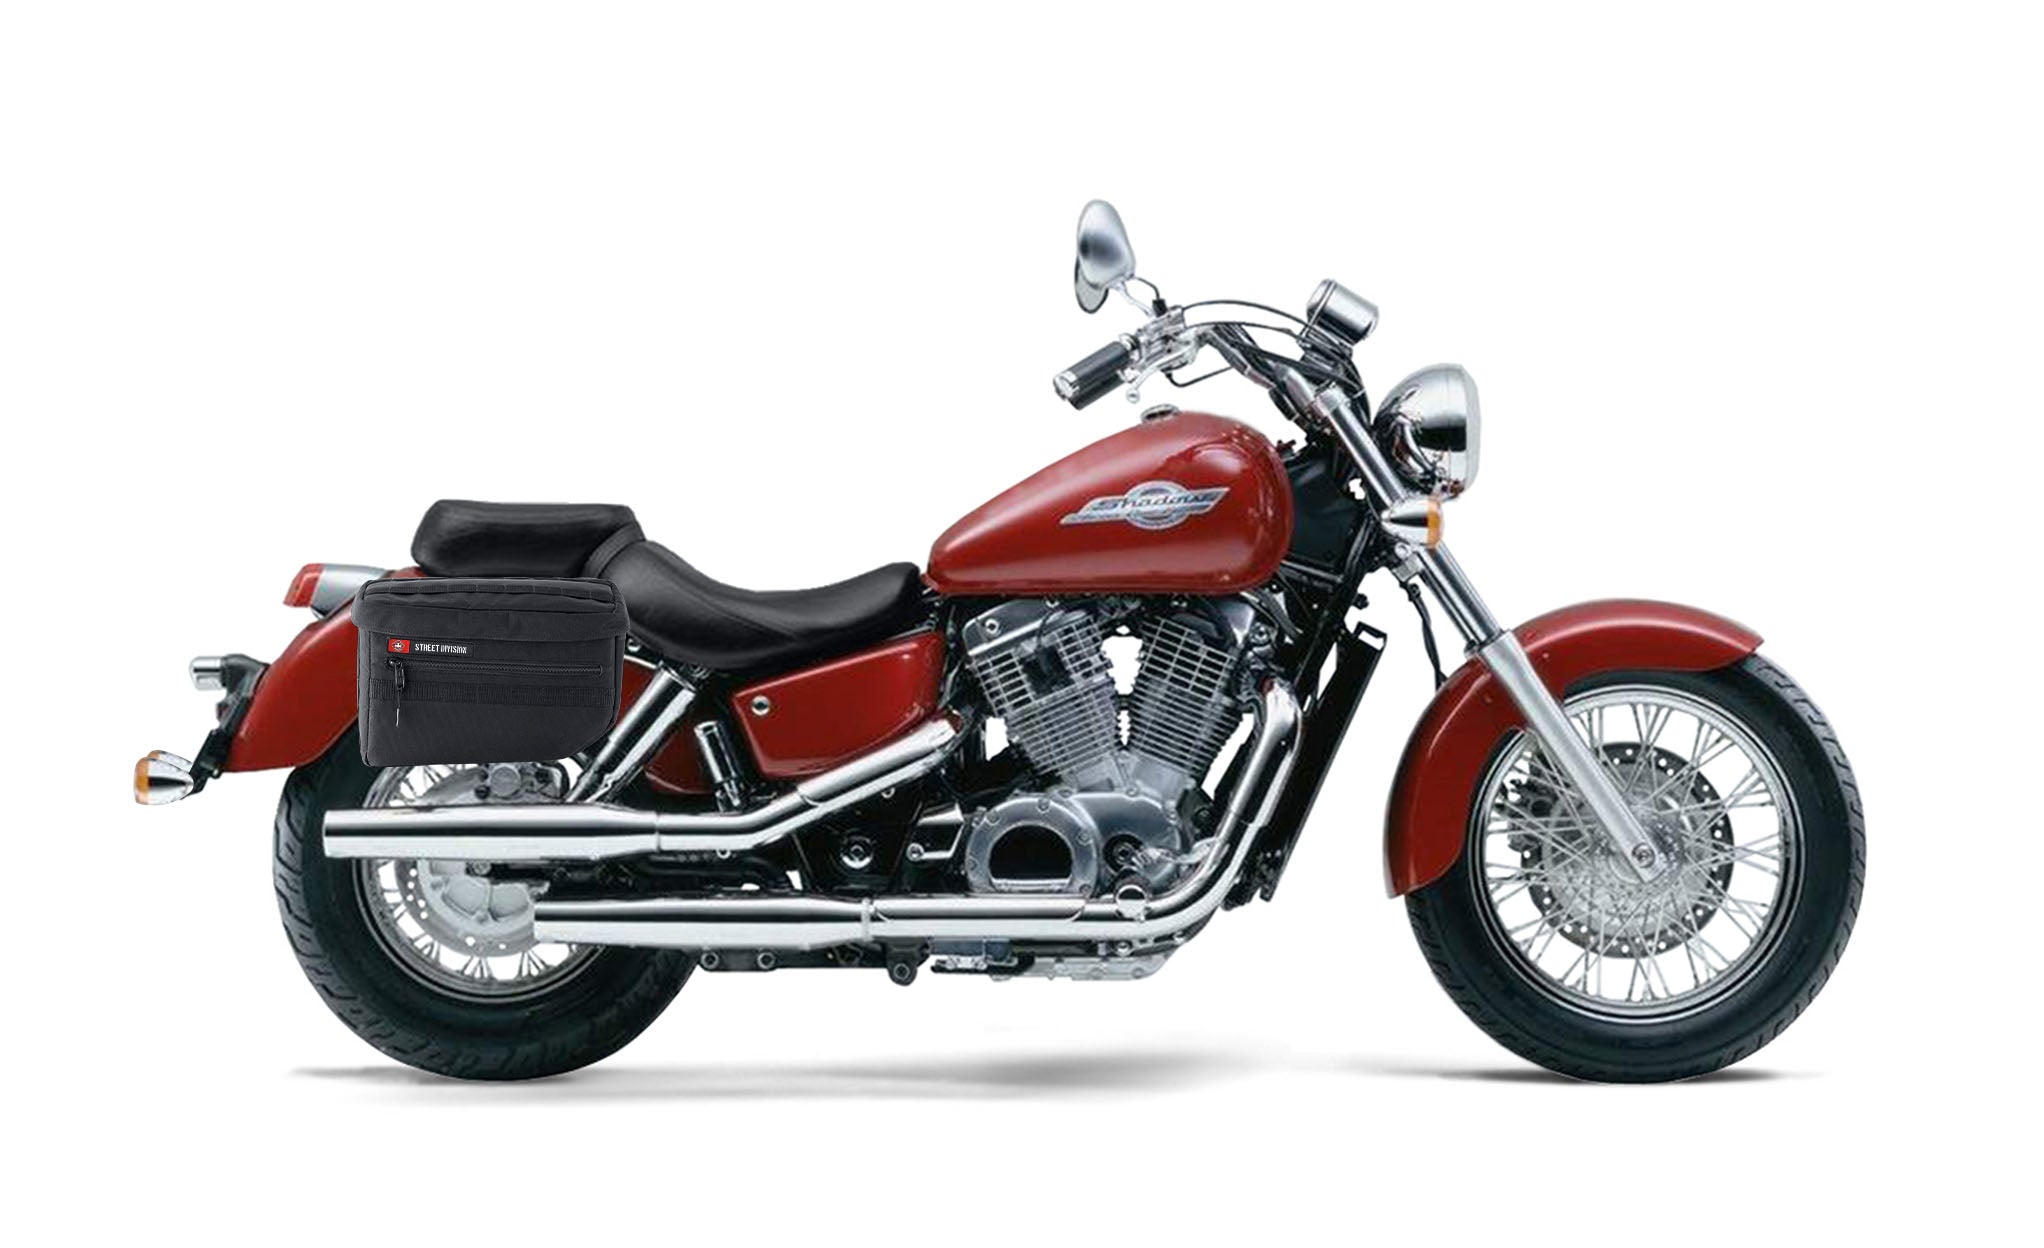 Viking Patriot Large Honda Shadow 1100 Ace Motorcycle Throw Over Saddlebags on Bike Photo @expand